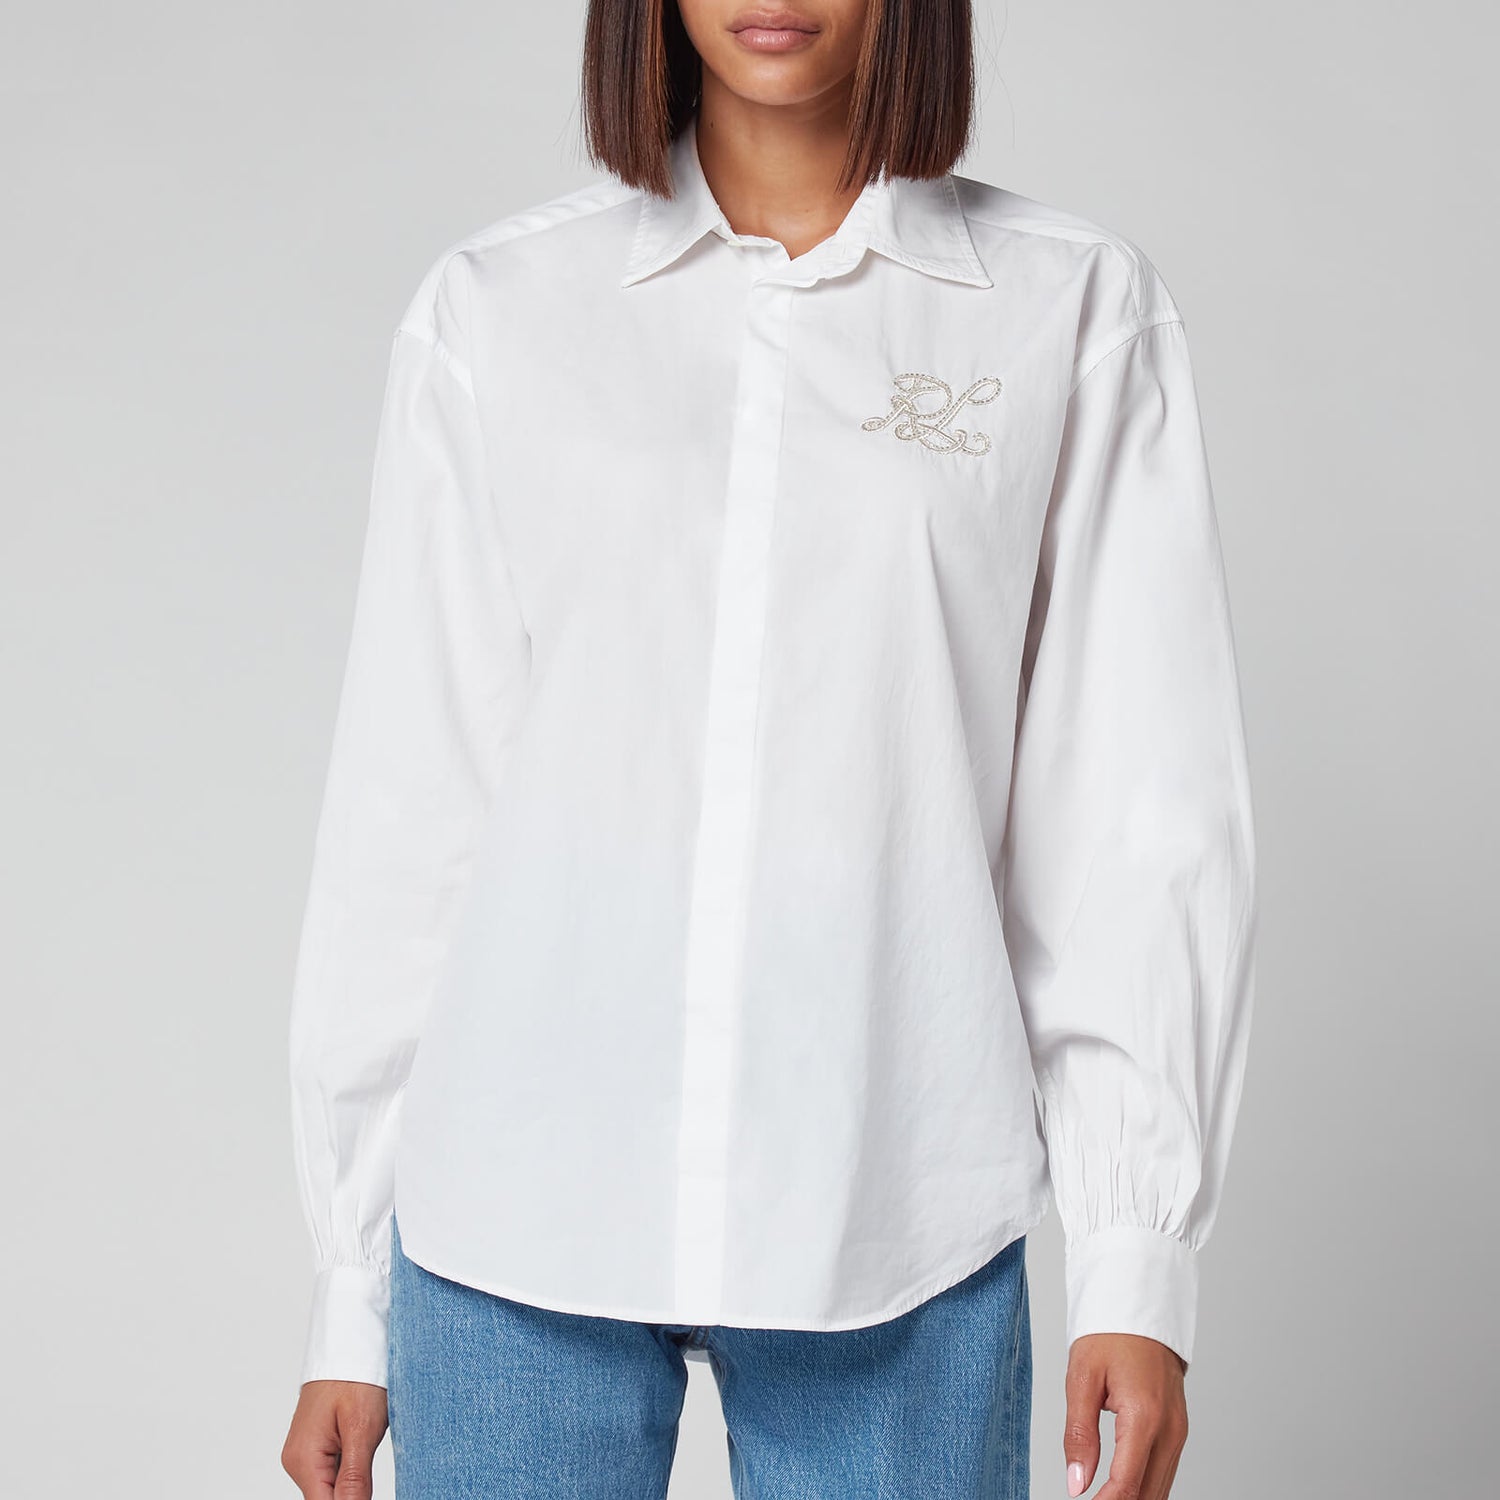 Polo Ralph Lauren Women's Oversized Shirt - White